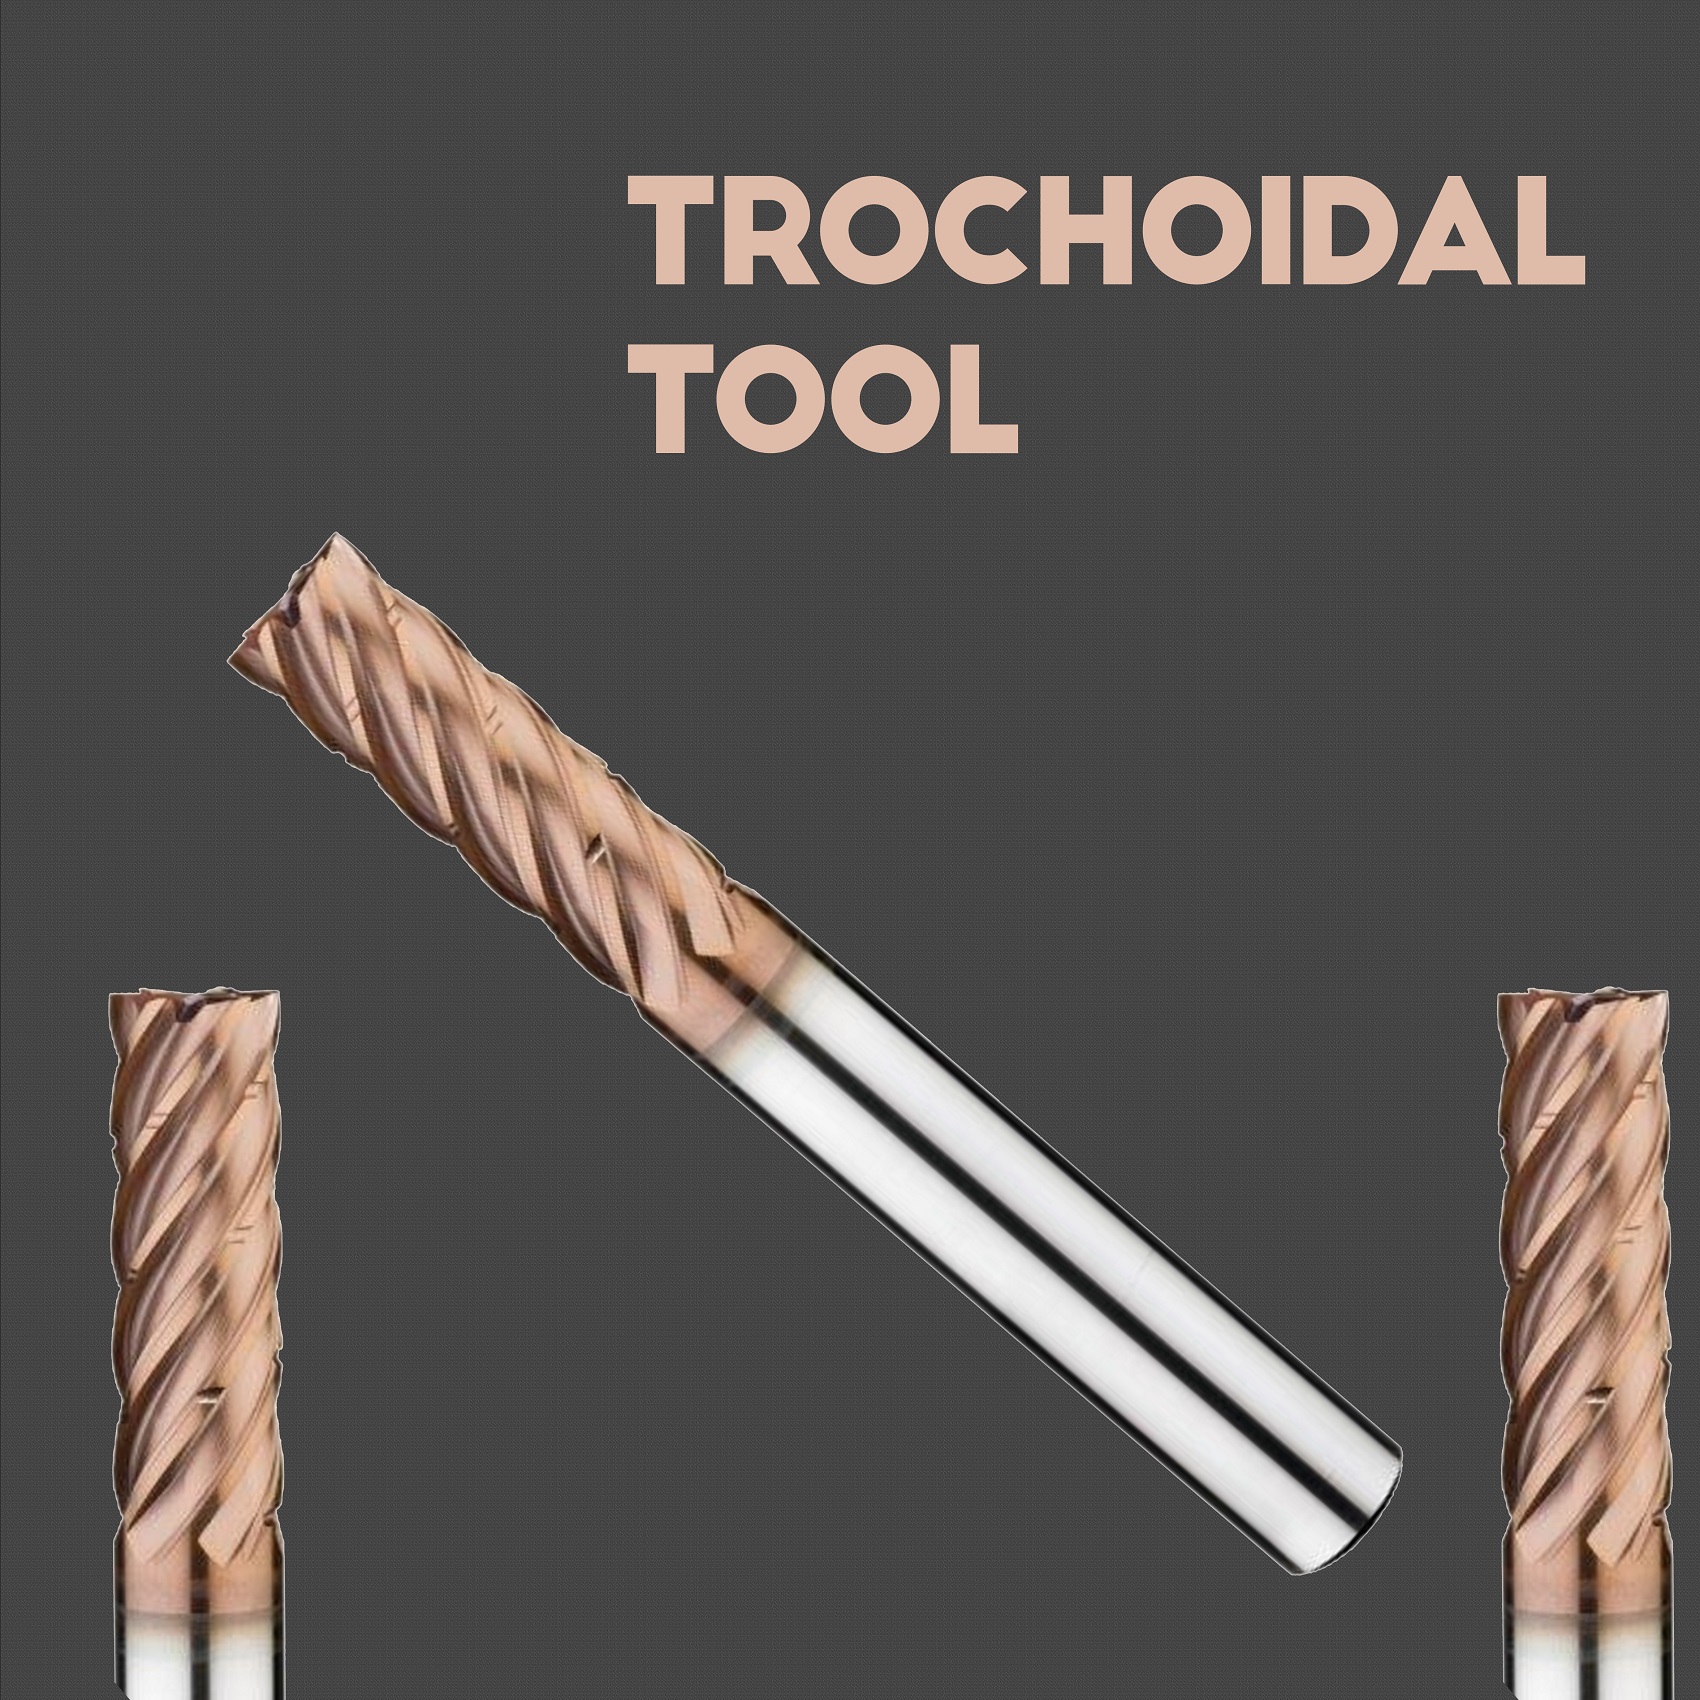 ITC expands trochoidal tool range